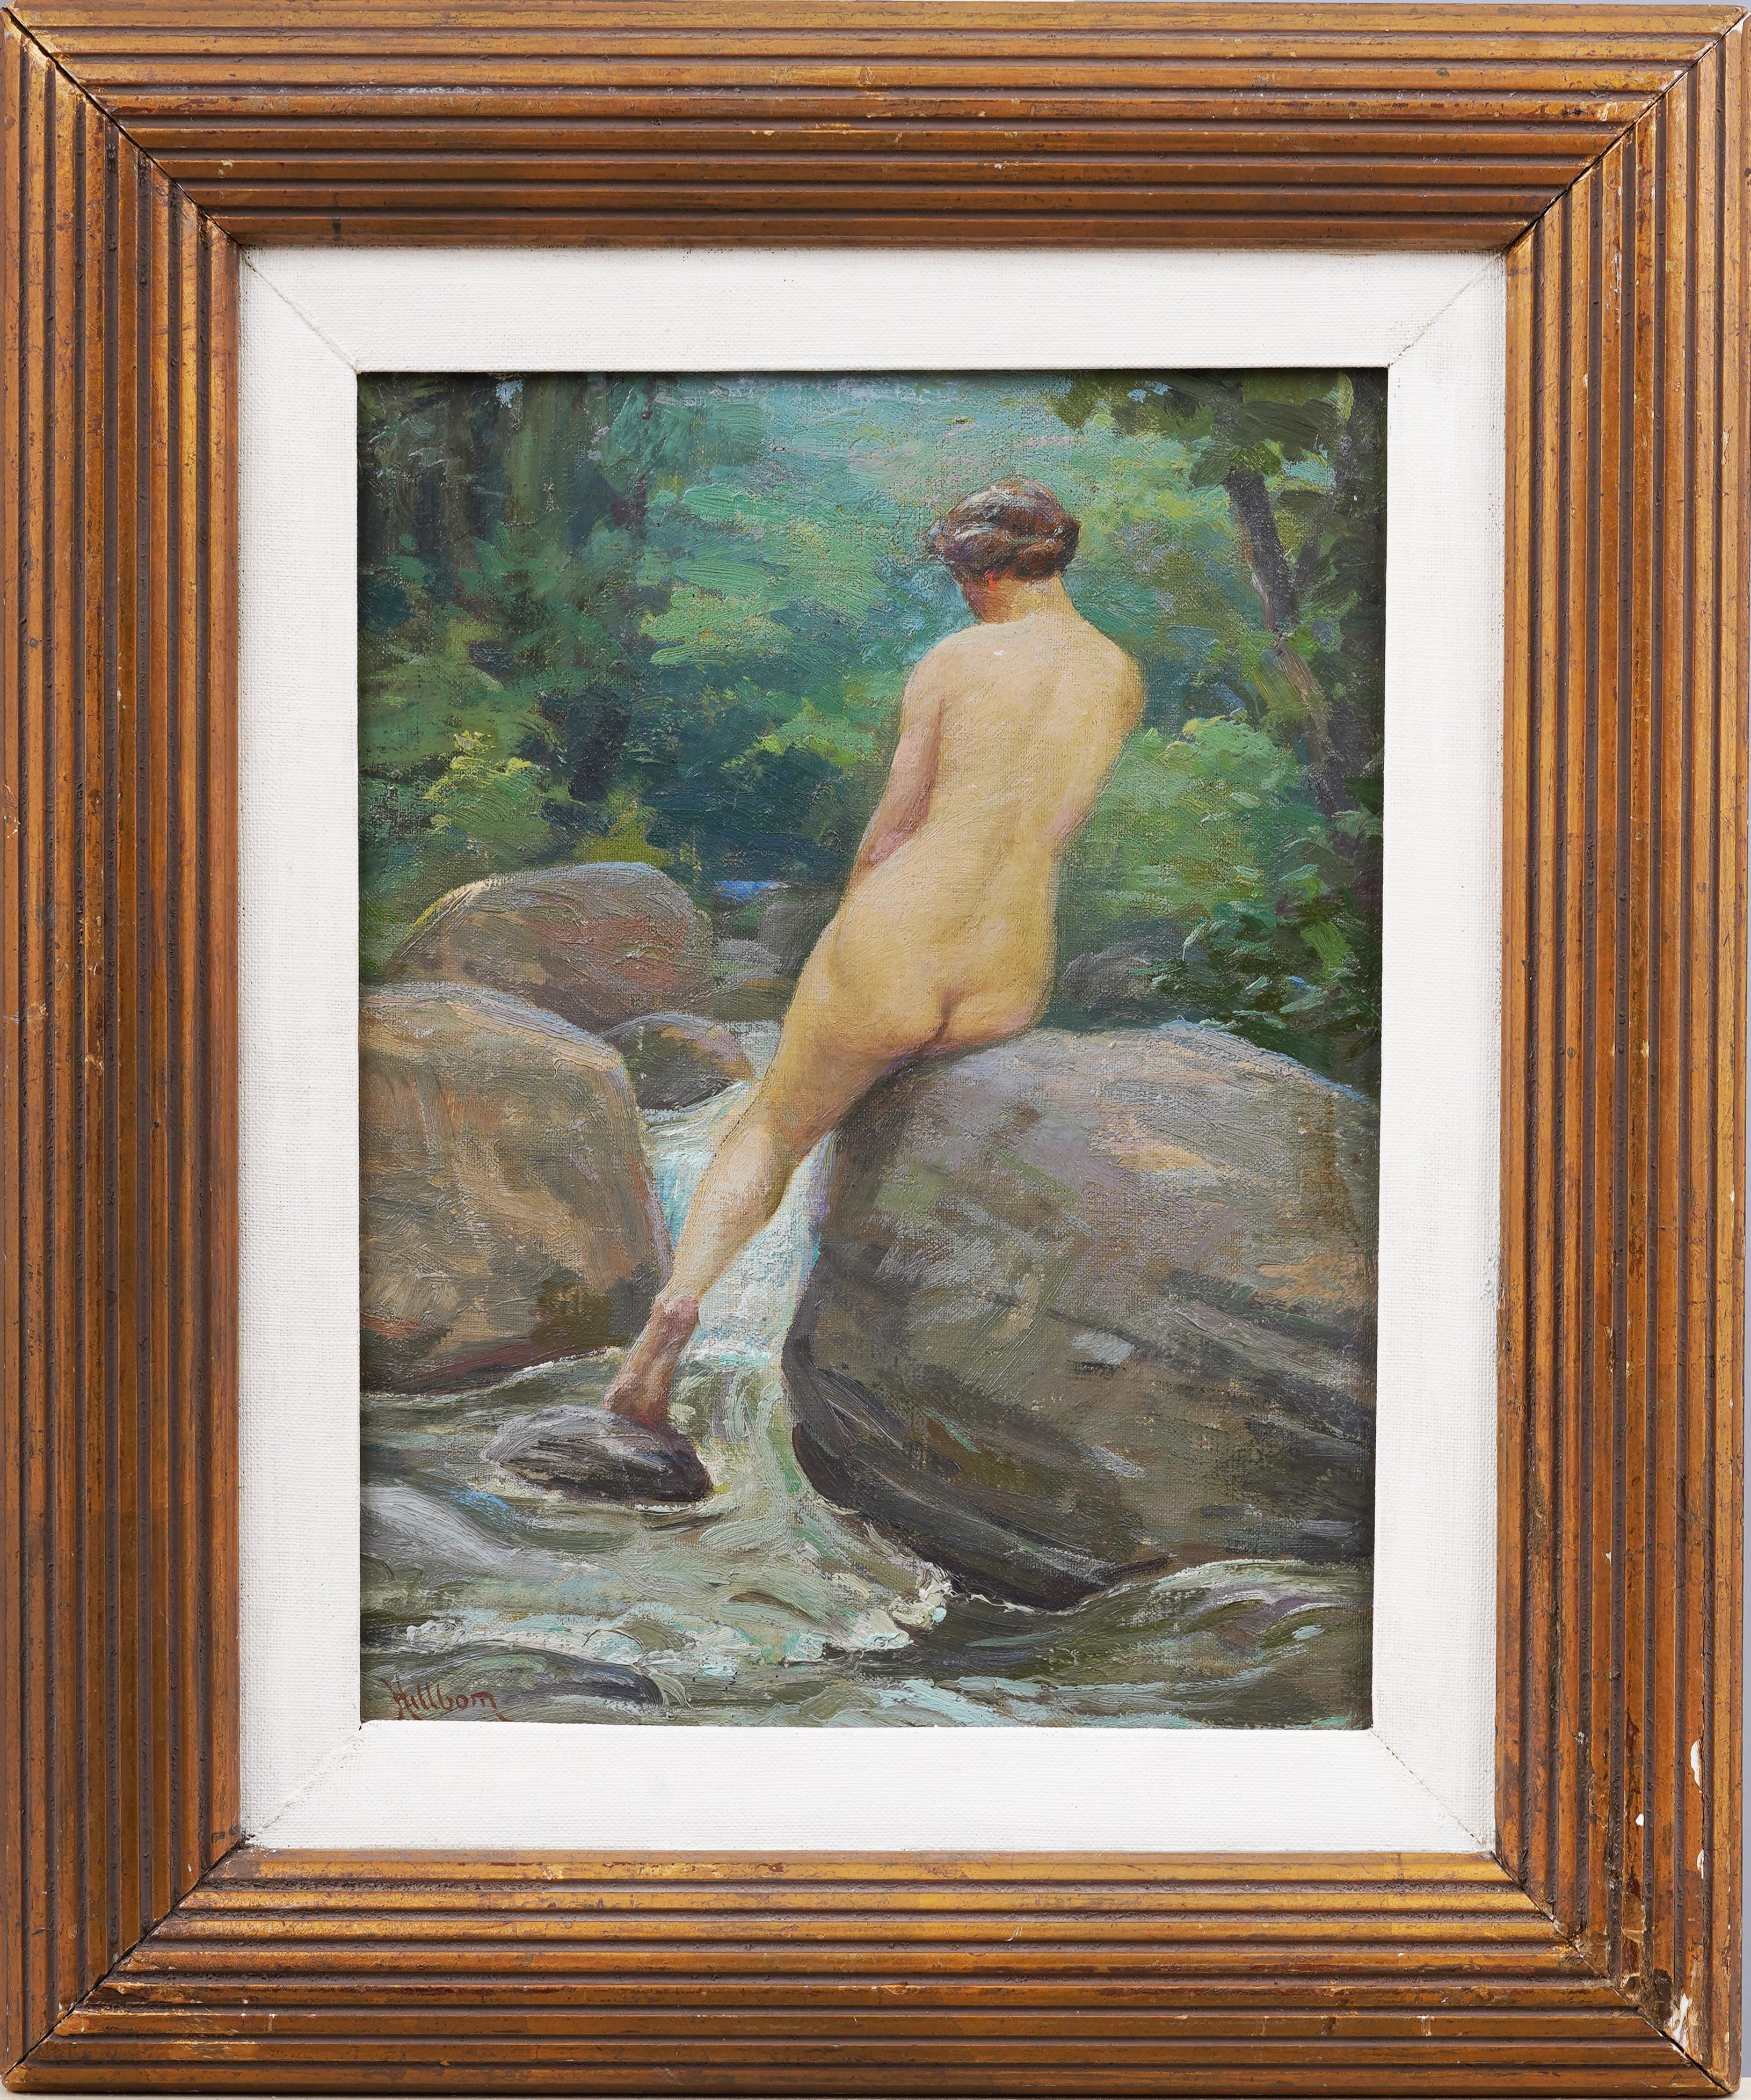 Antique American impressionist landscape with a nude bather by Henrik Hillblom (1863 - 1948).